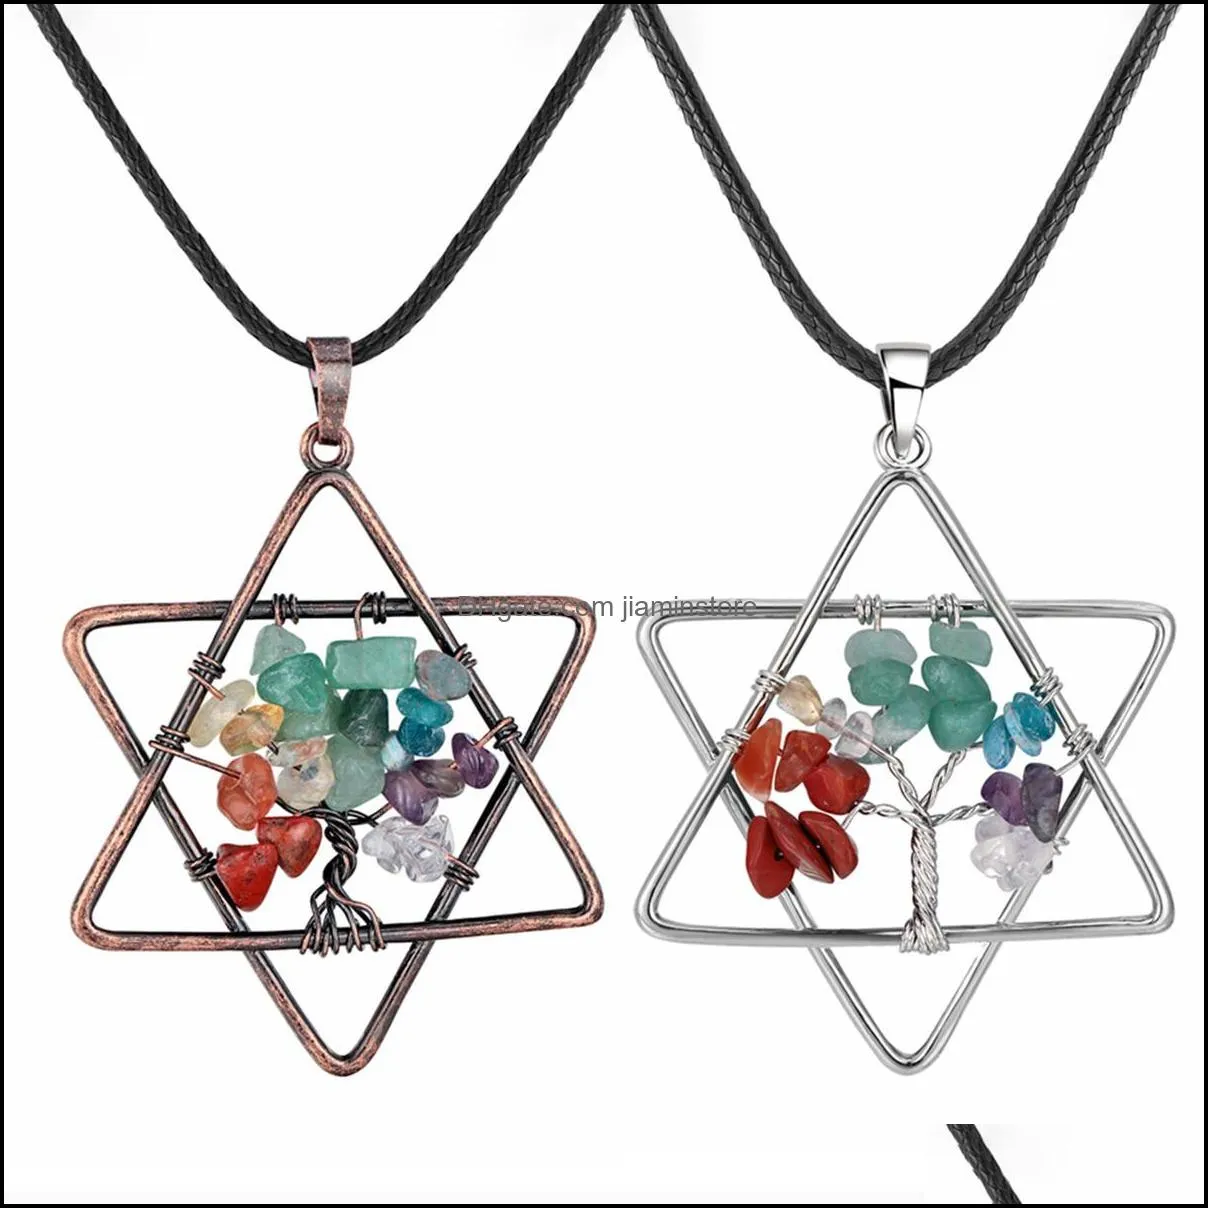 melcaba six pointed star wound life tree pendant seven chakra necklace natural healing crystals quartz gemstone pendants